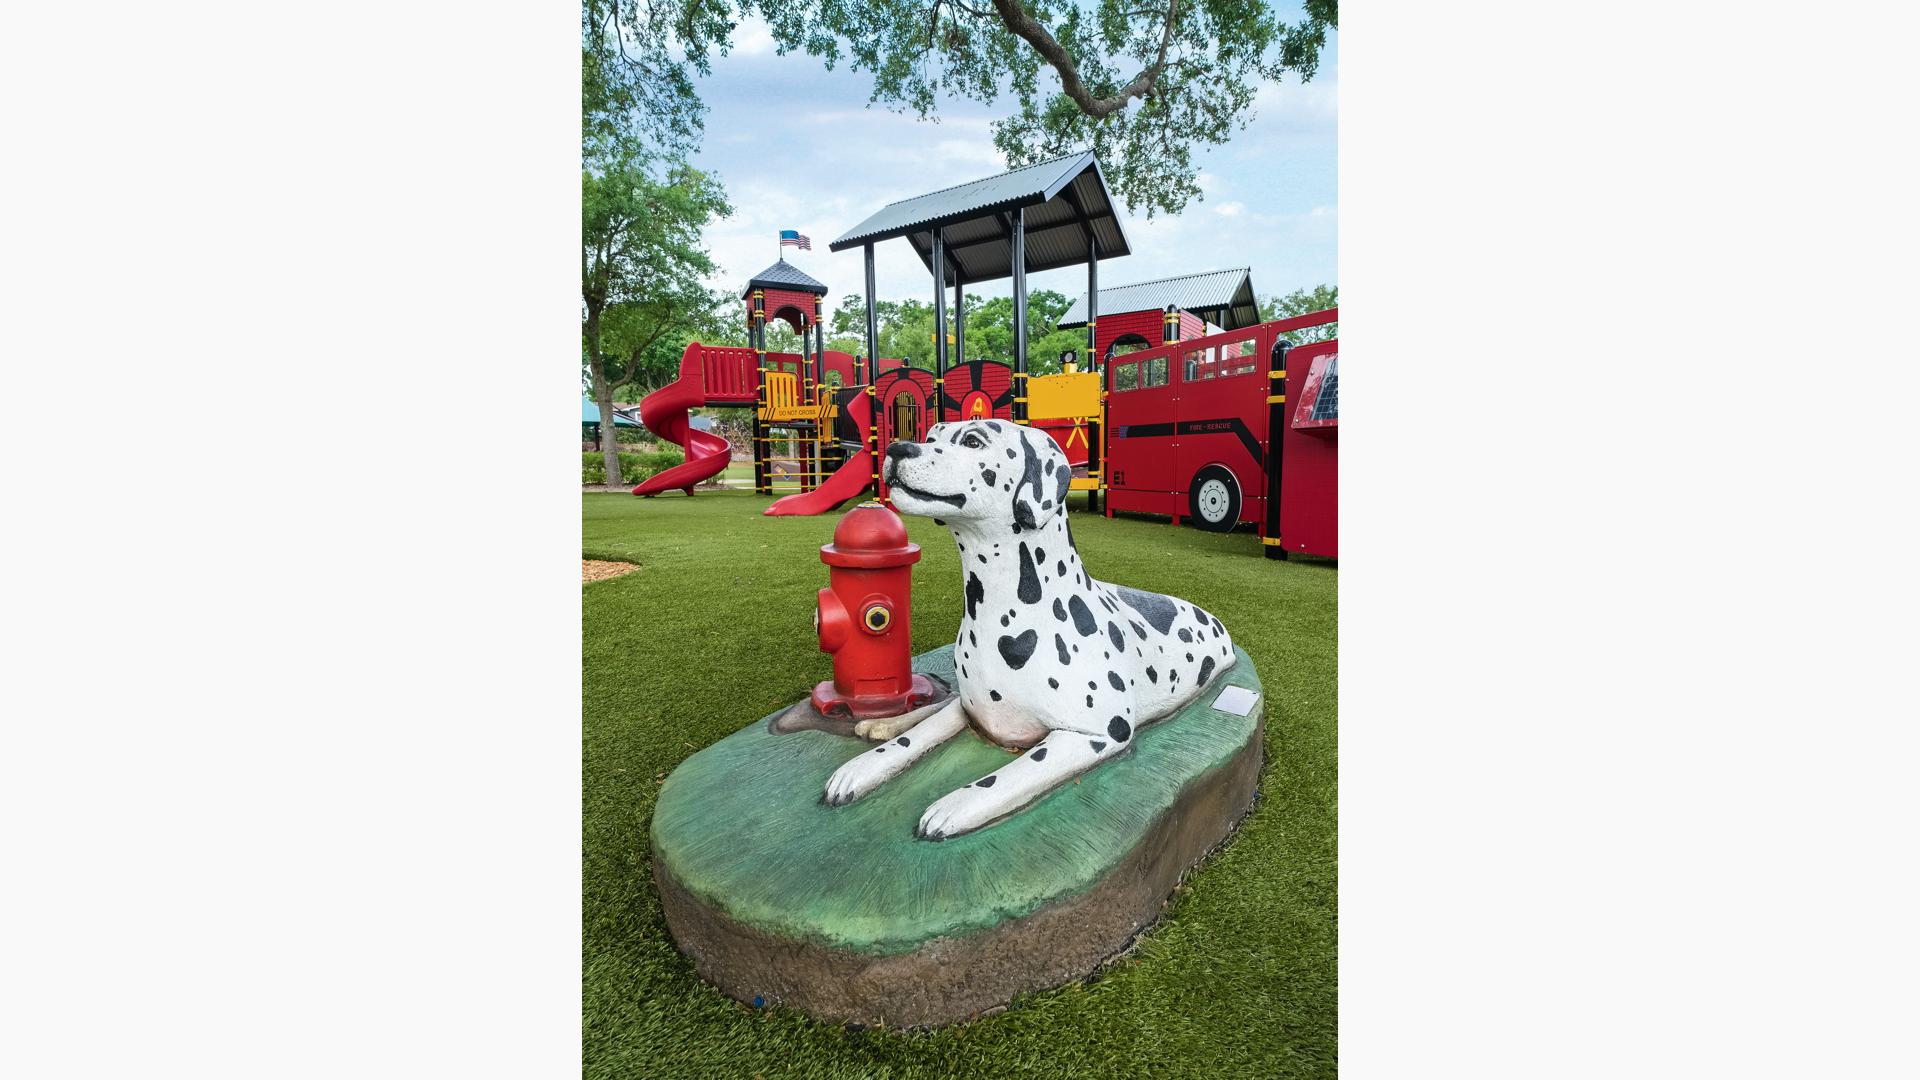 Fire station Dalmatian w/fire hydrant statue